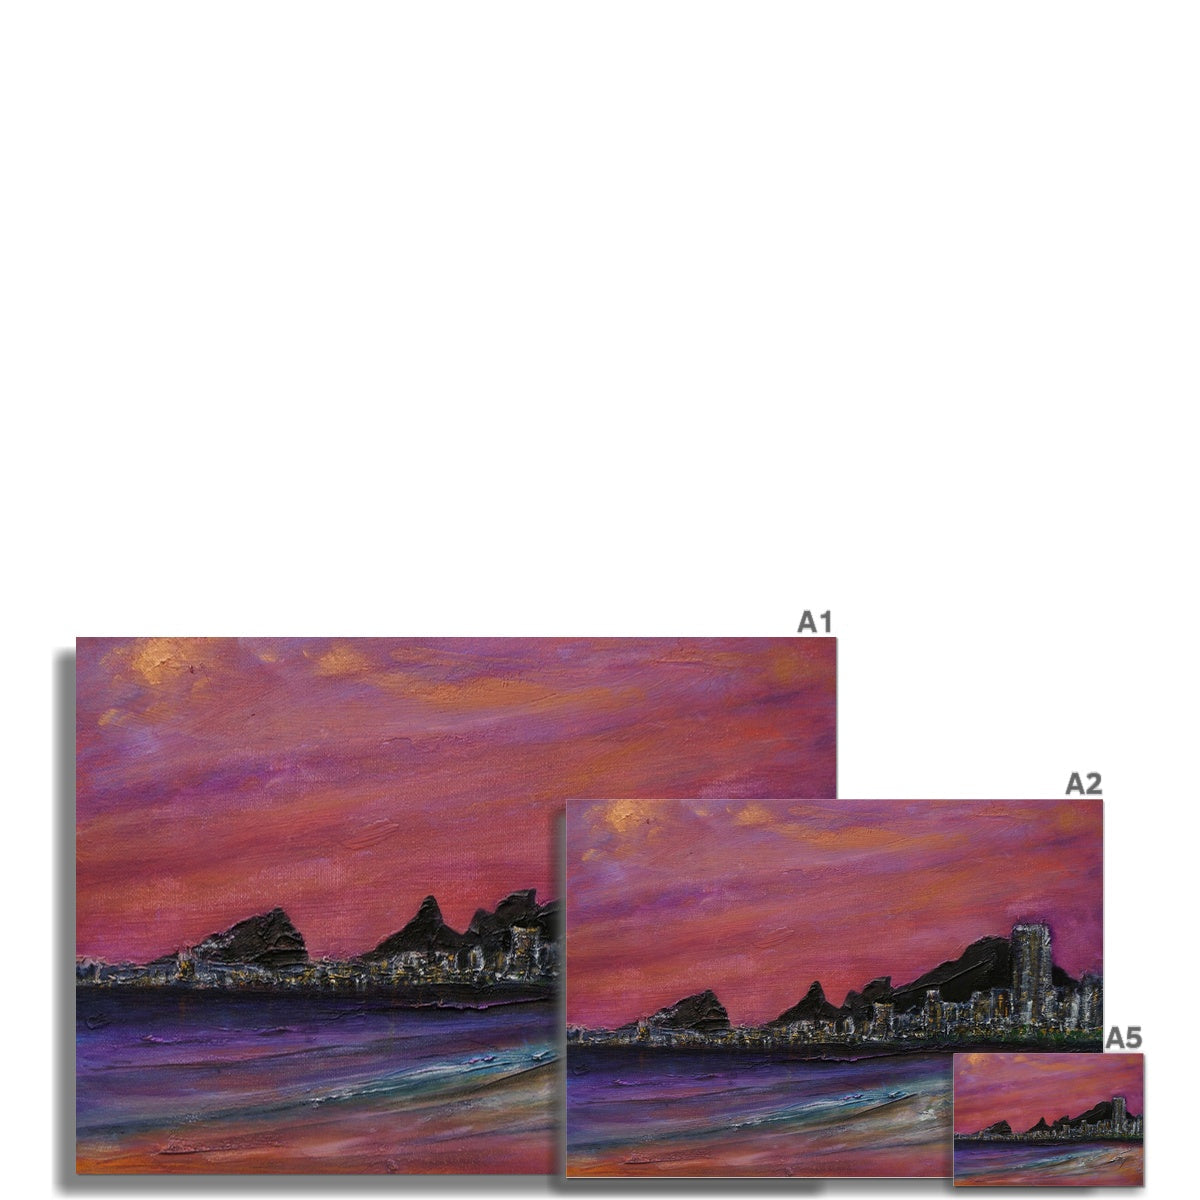 Copacabana Beach Dusk Painting | Fine Art Prints From Scotland-Unframed Prints-World Art Gallery-Paintings, Prints, Homeware, Art Gifts From Scotland By Scottish Artist Kevin Hunter